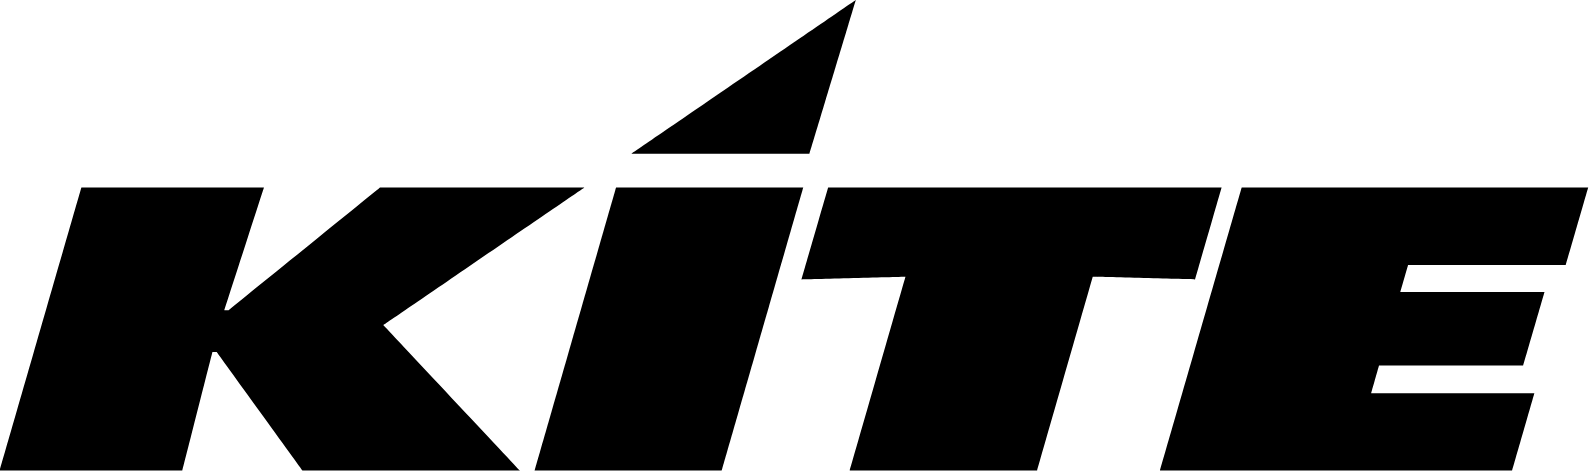 Kite Realty logo (transparent PNG)